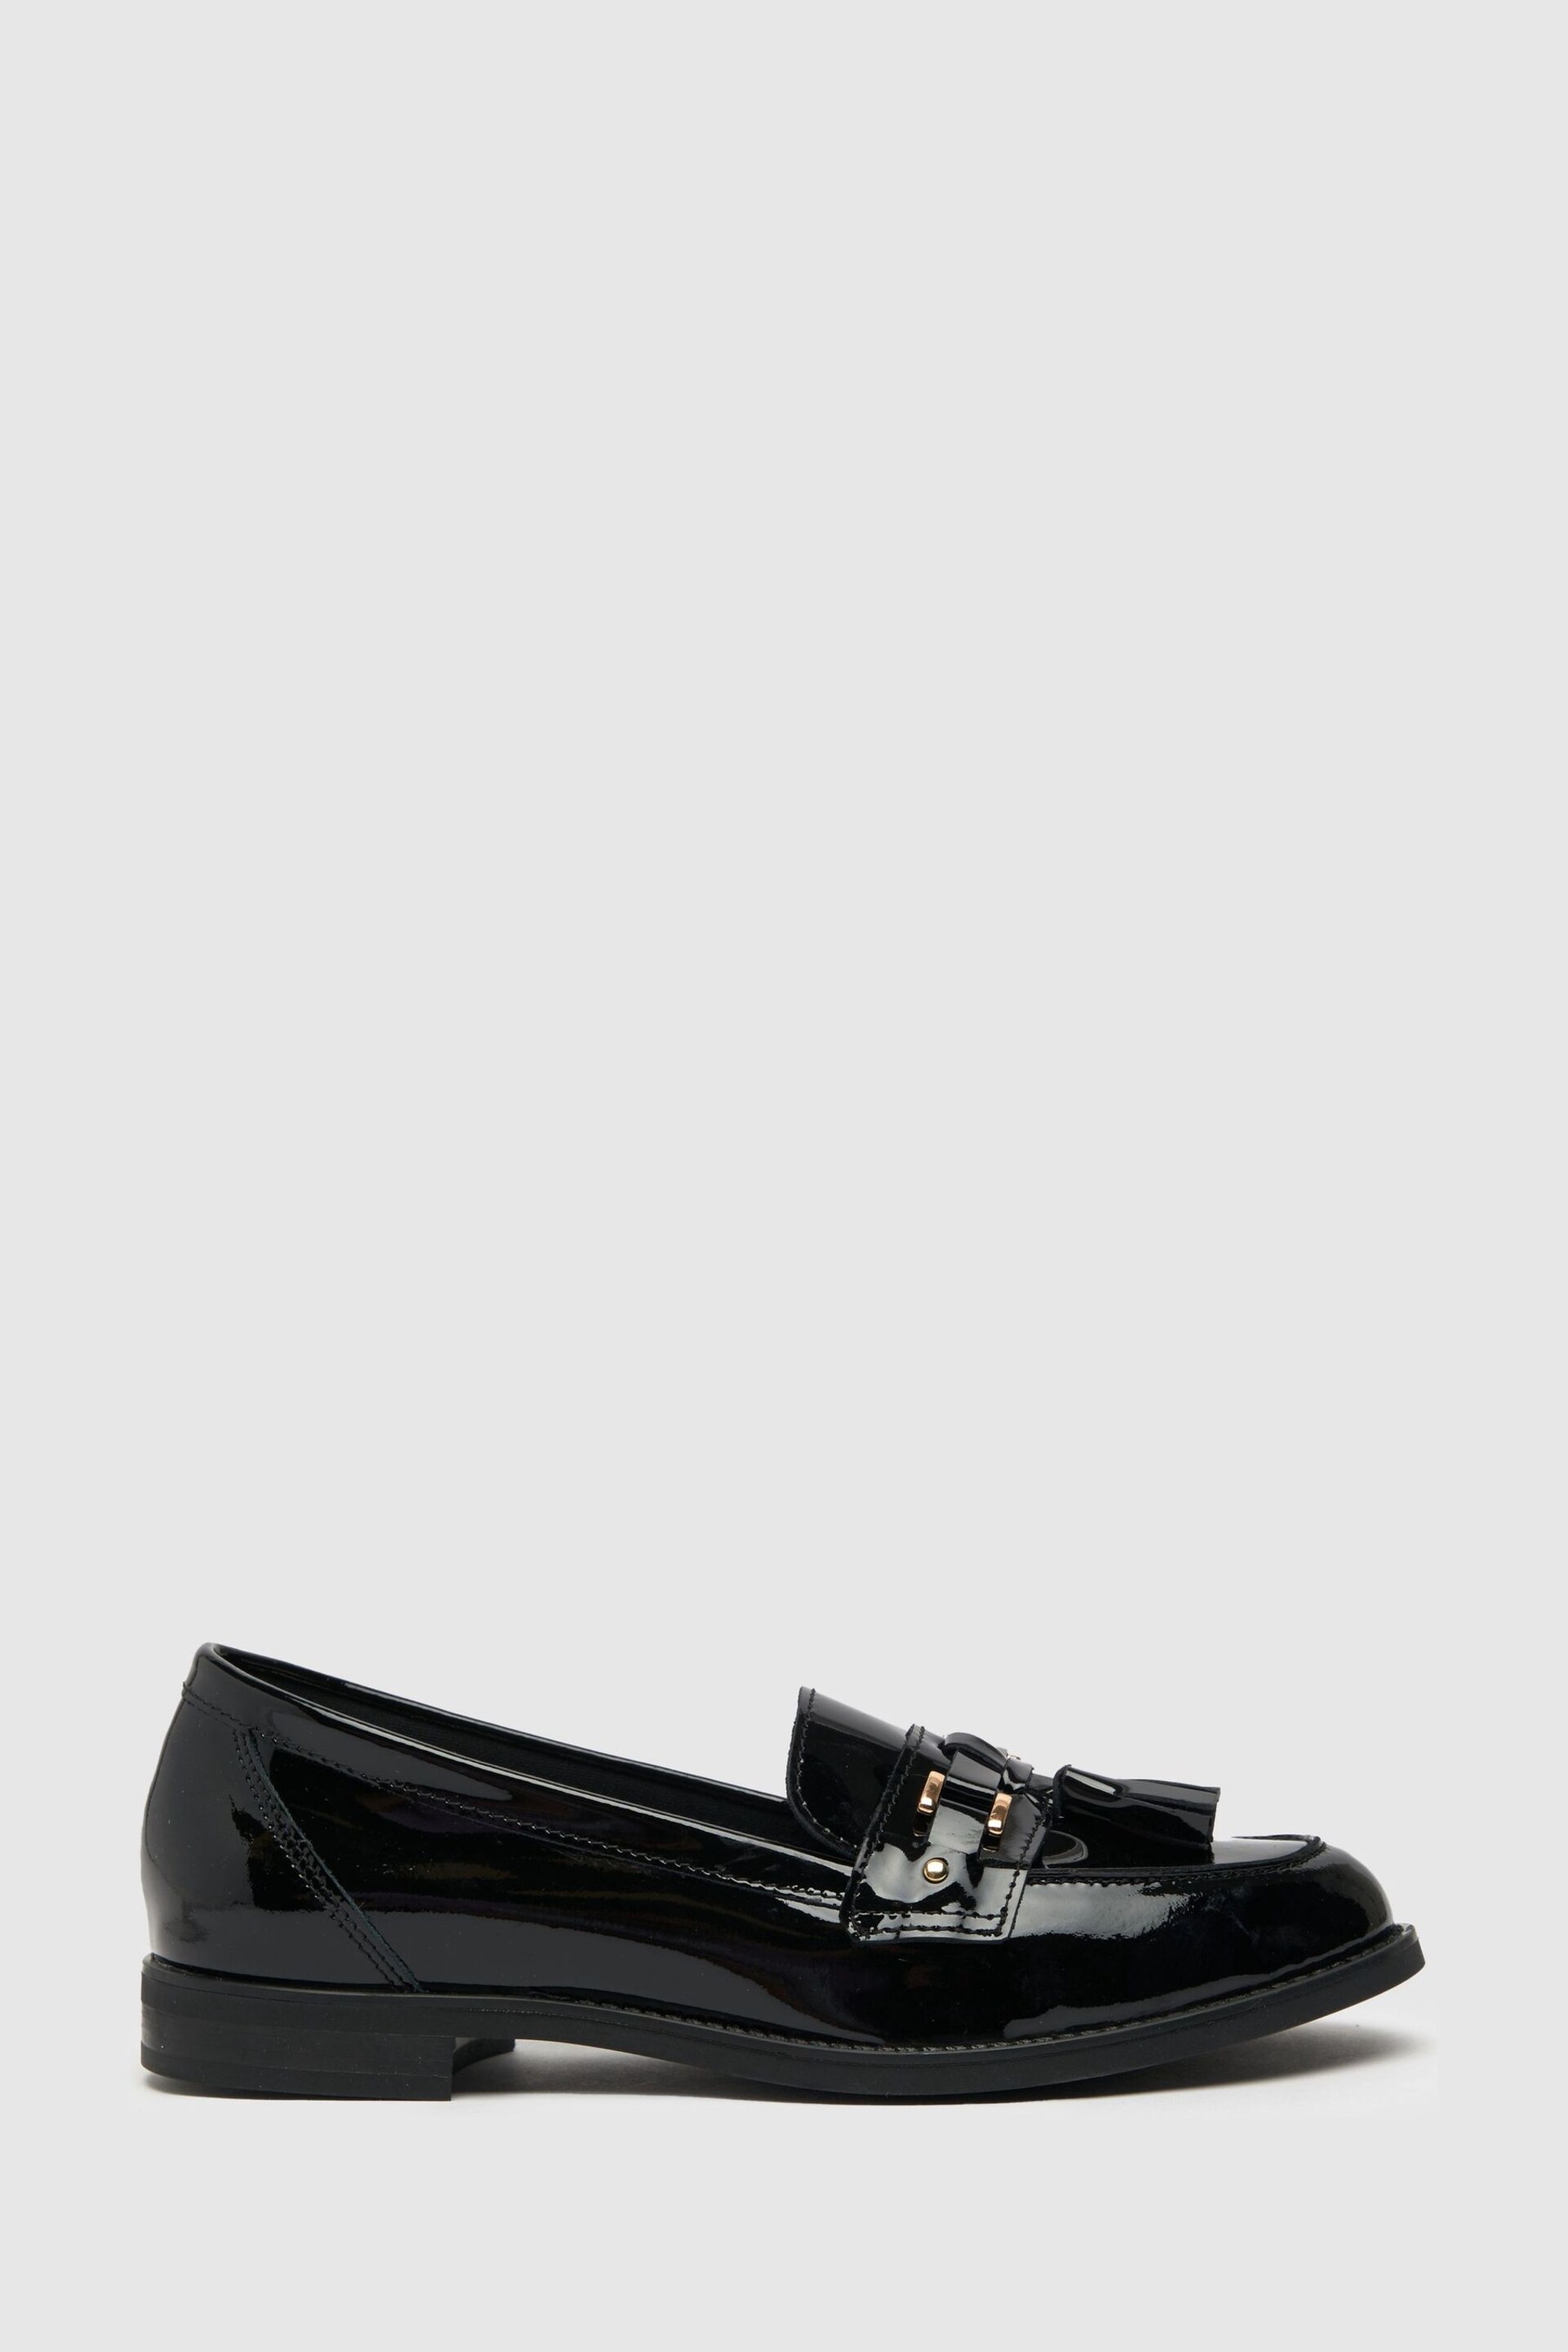 Schuh Liv Patent Tassel 	Black Loafers - Image 1 of 4